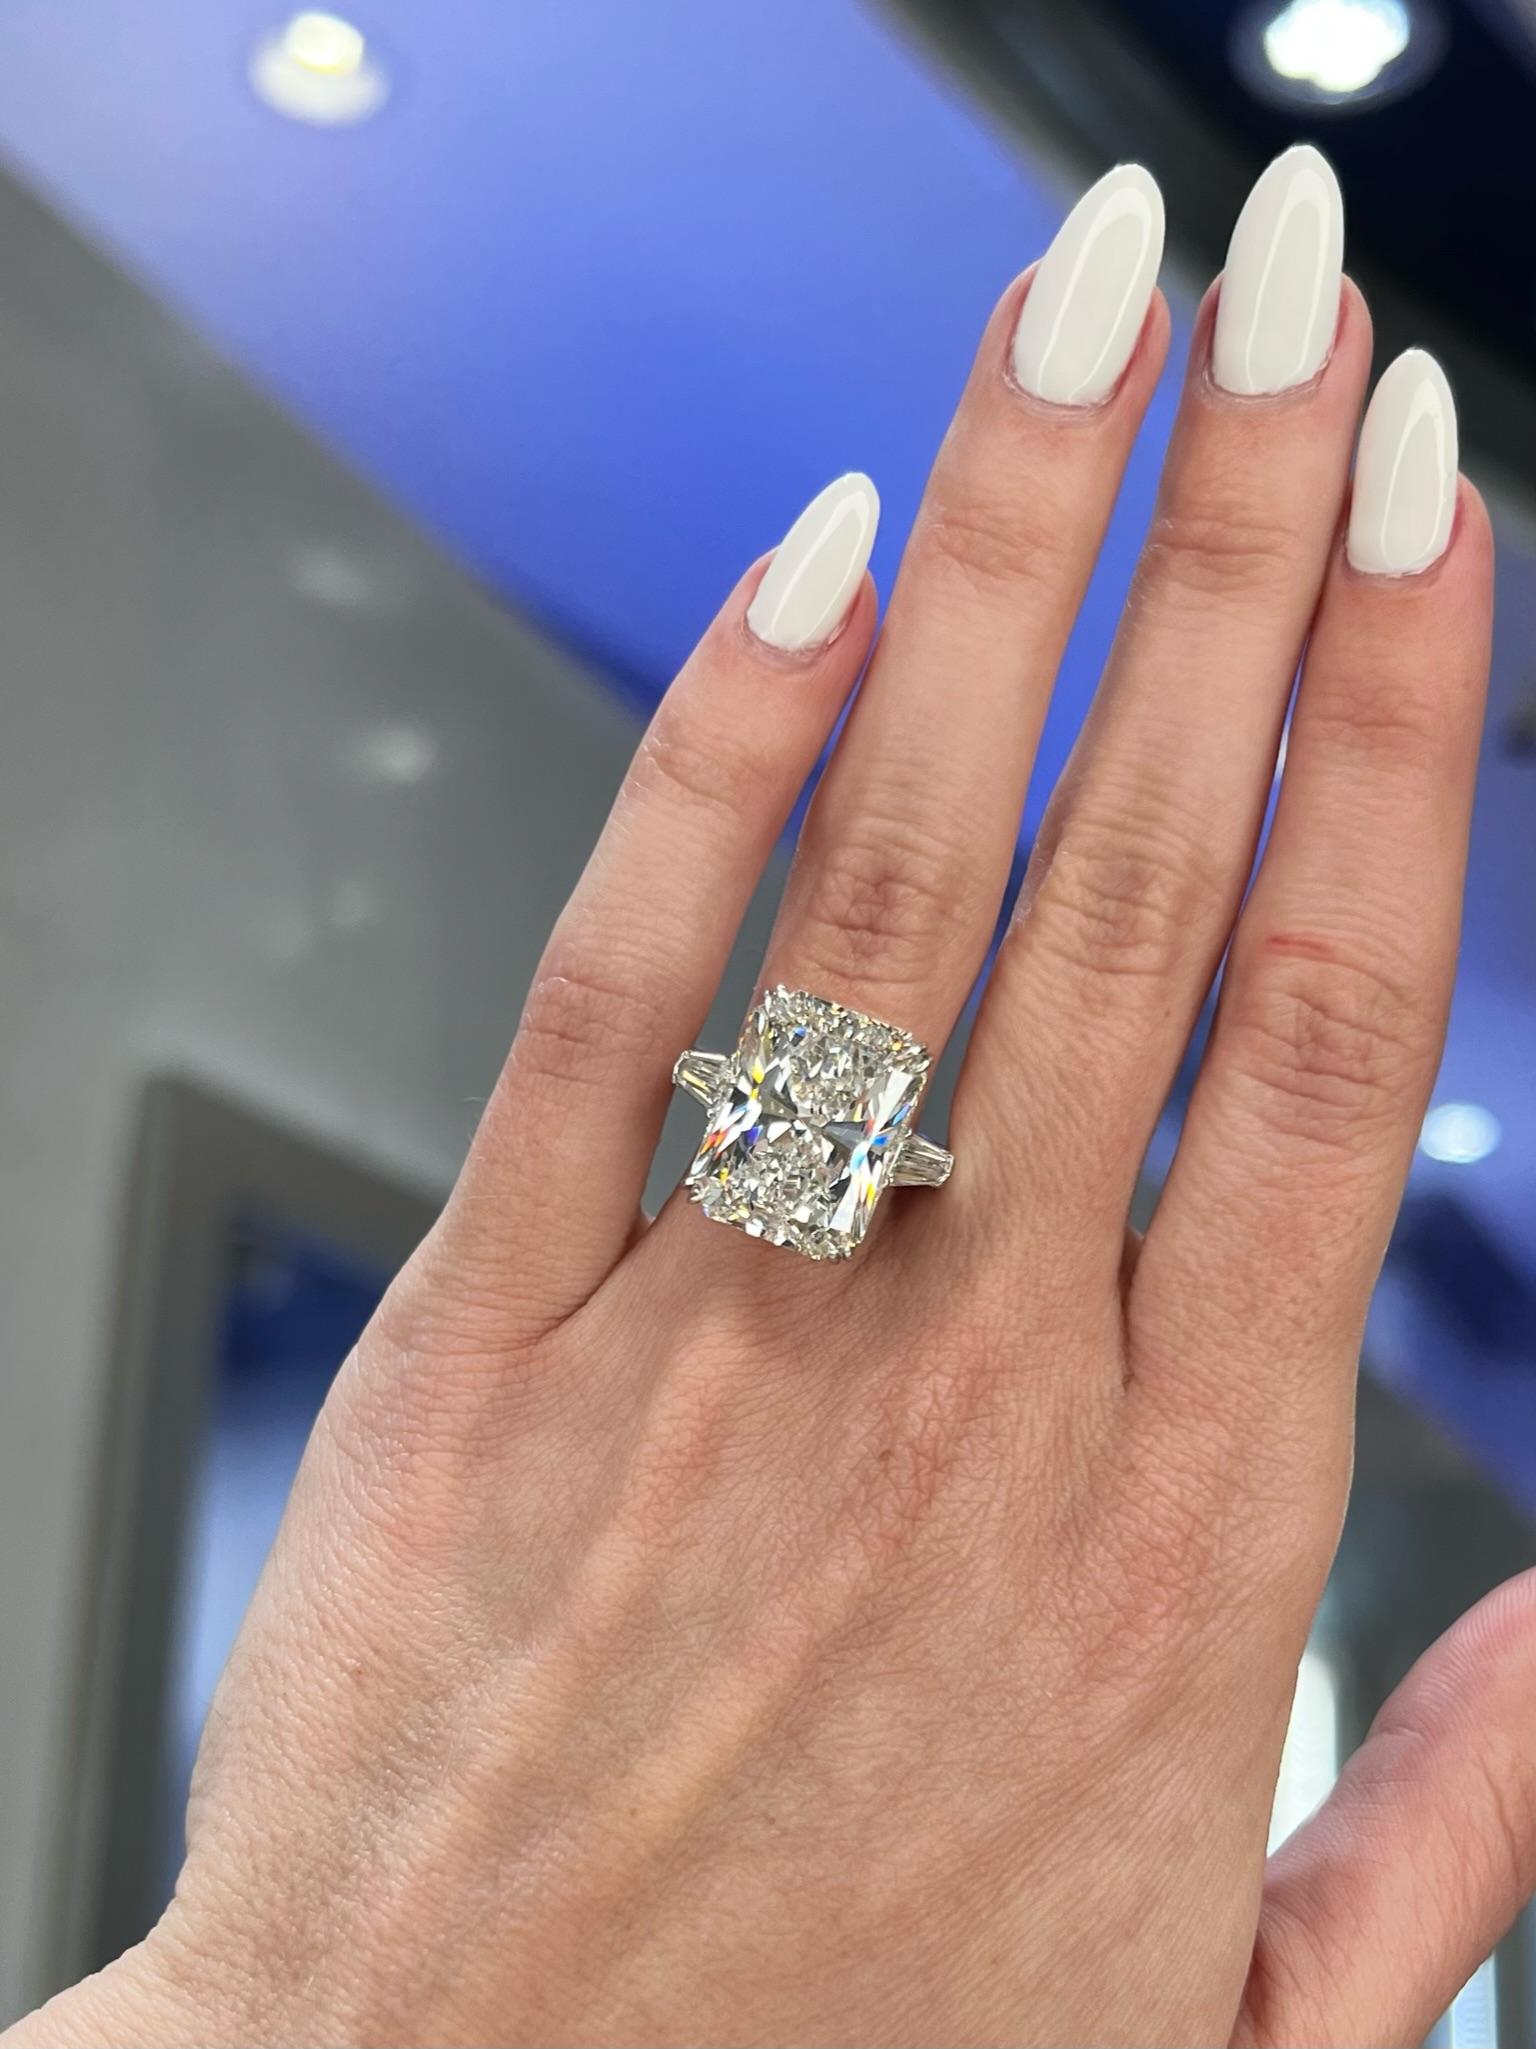 6 carat radiant cut diamond ring